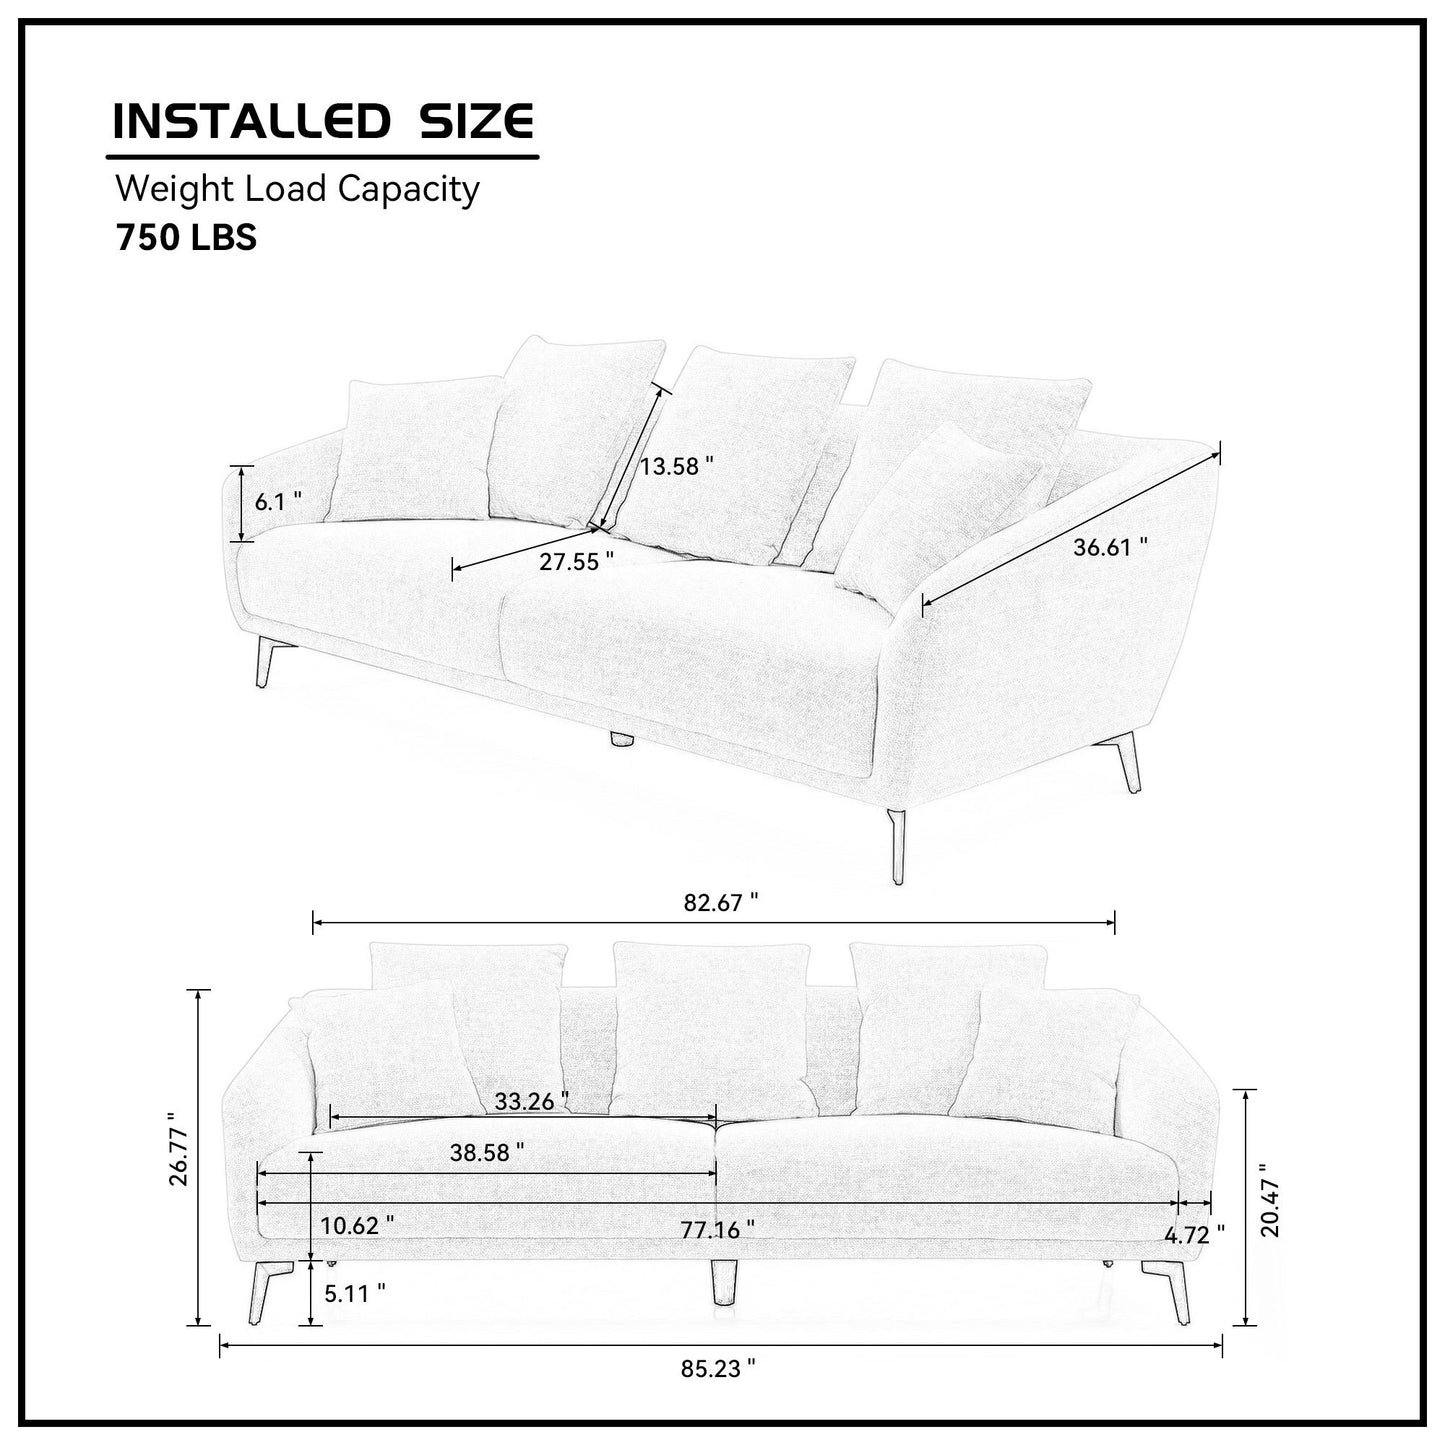 Maison Modern Fabric Upholstered Sofa Three Cushions & 2 Pillows - Light Grey